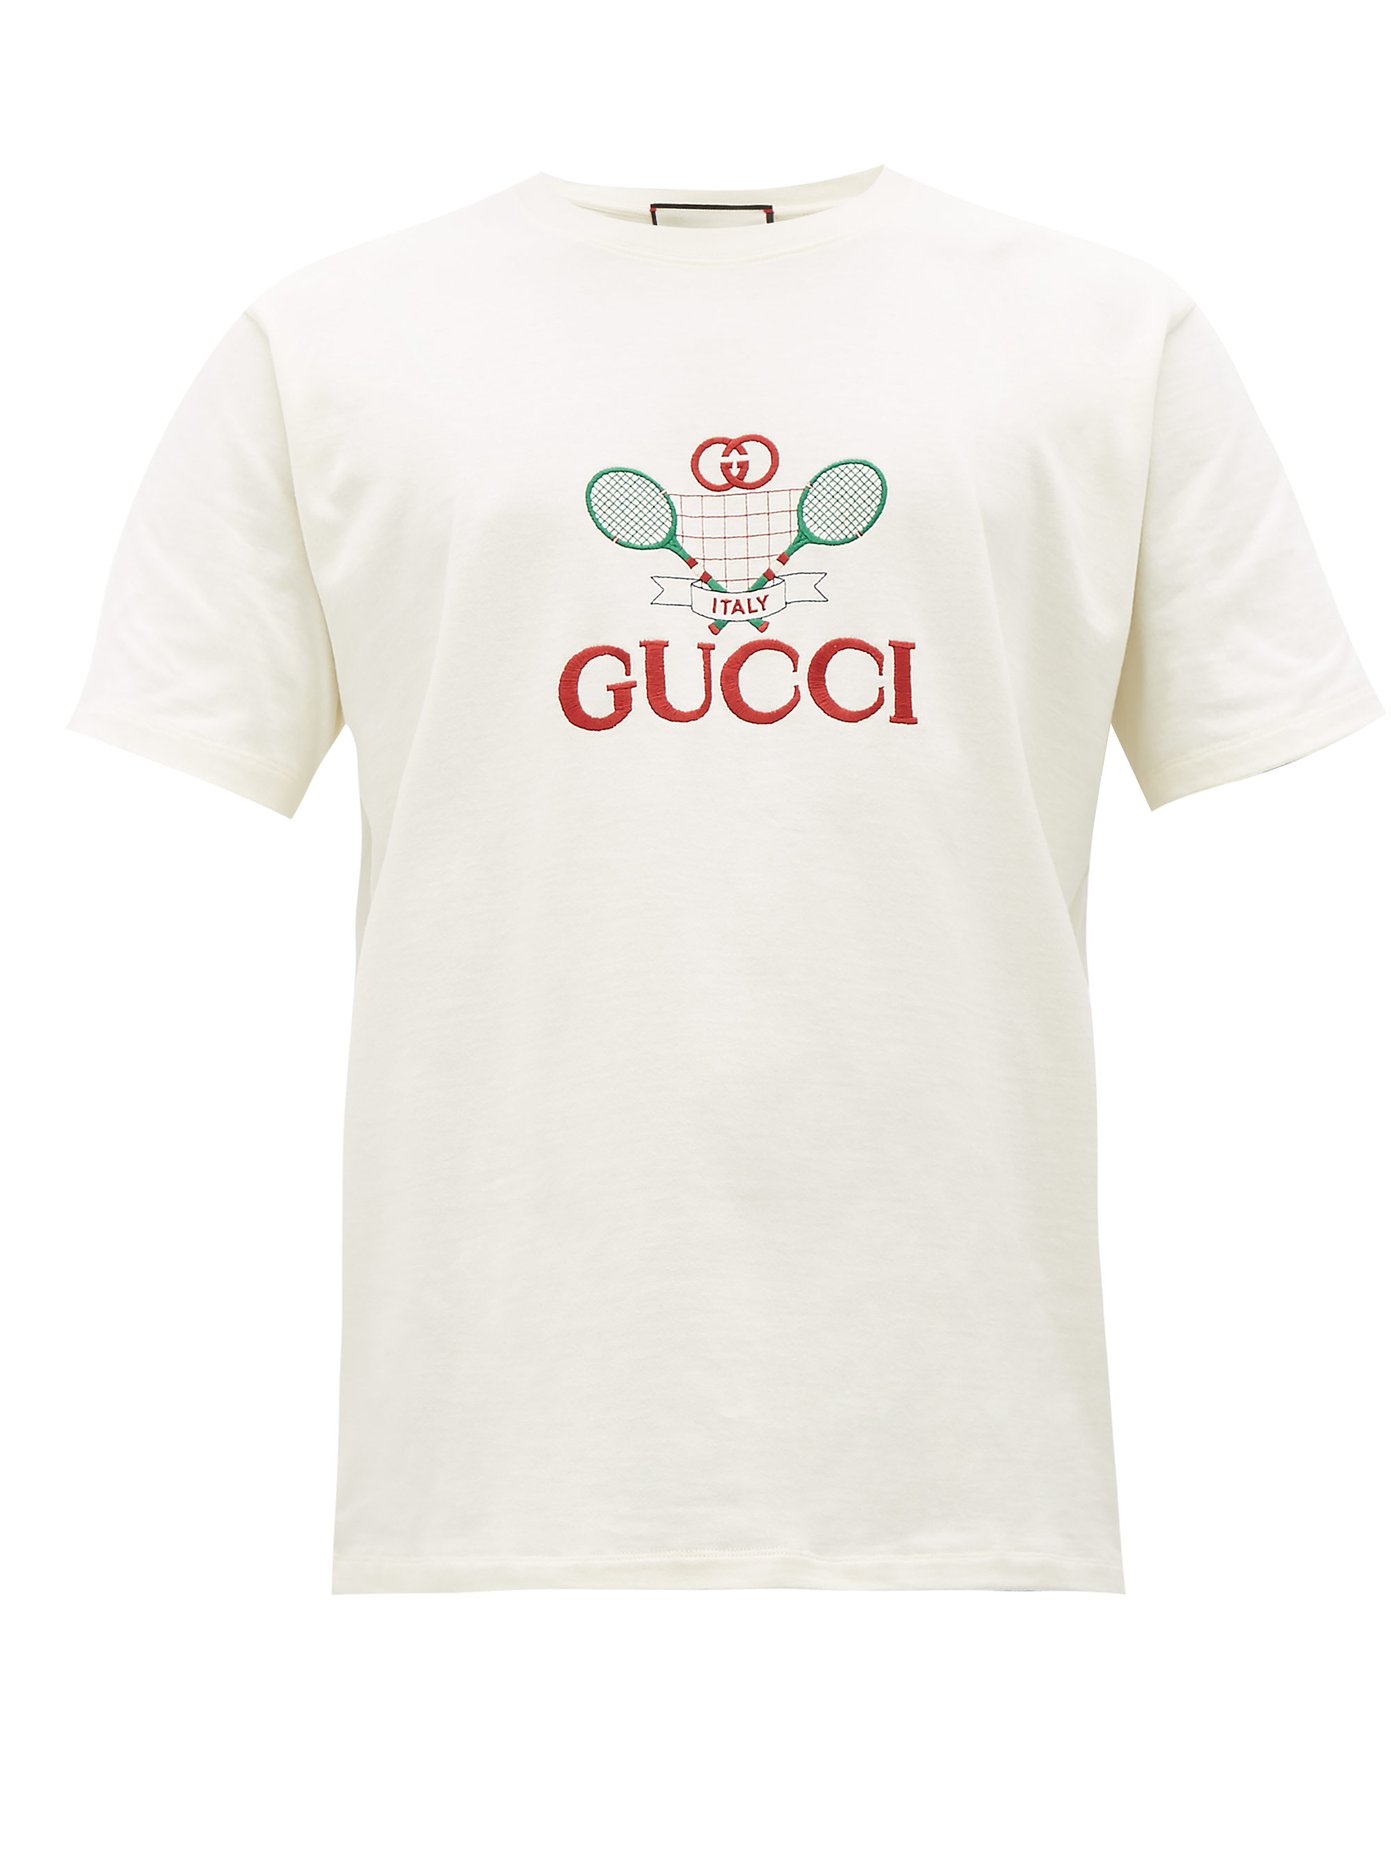 gucci tennis racket shirt